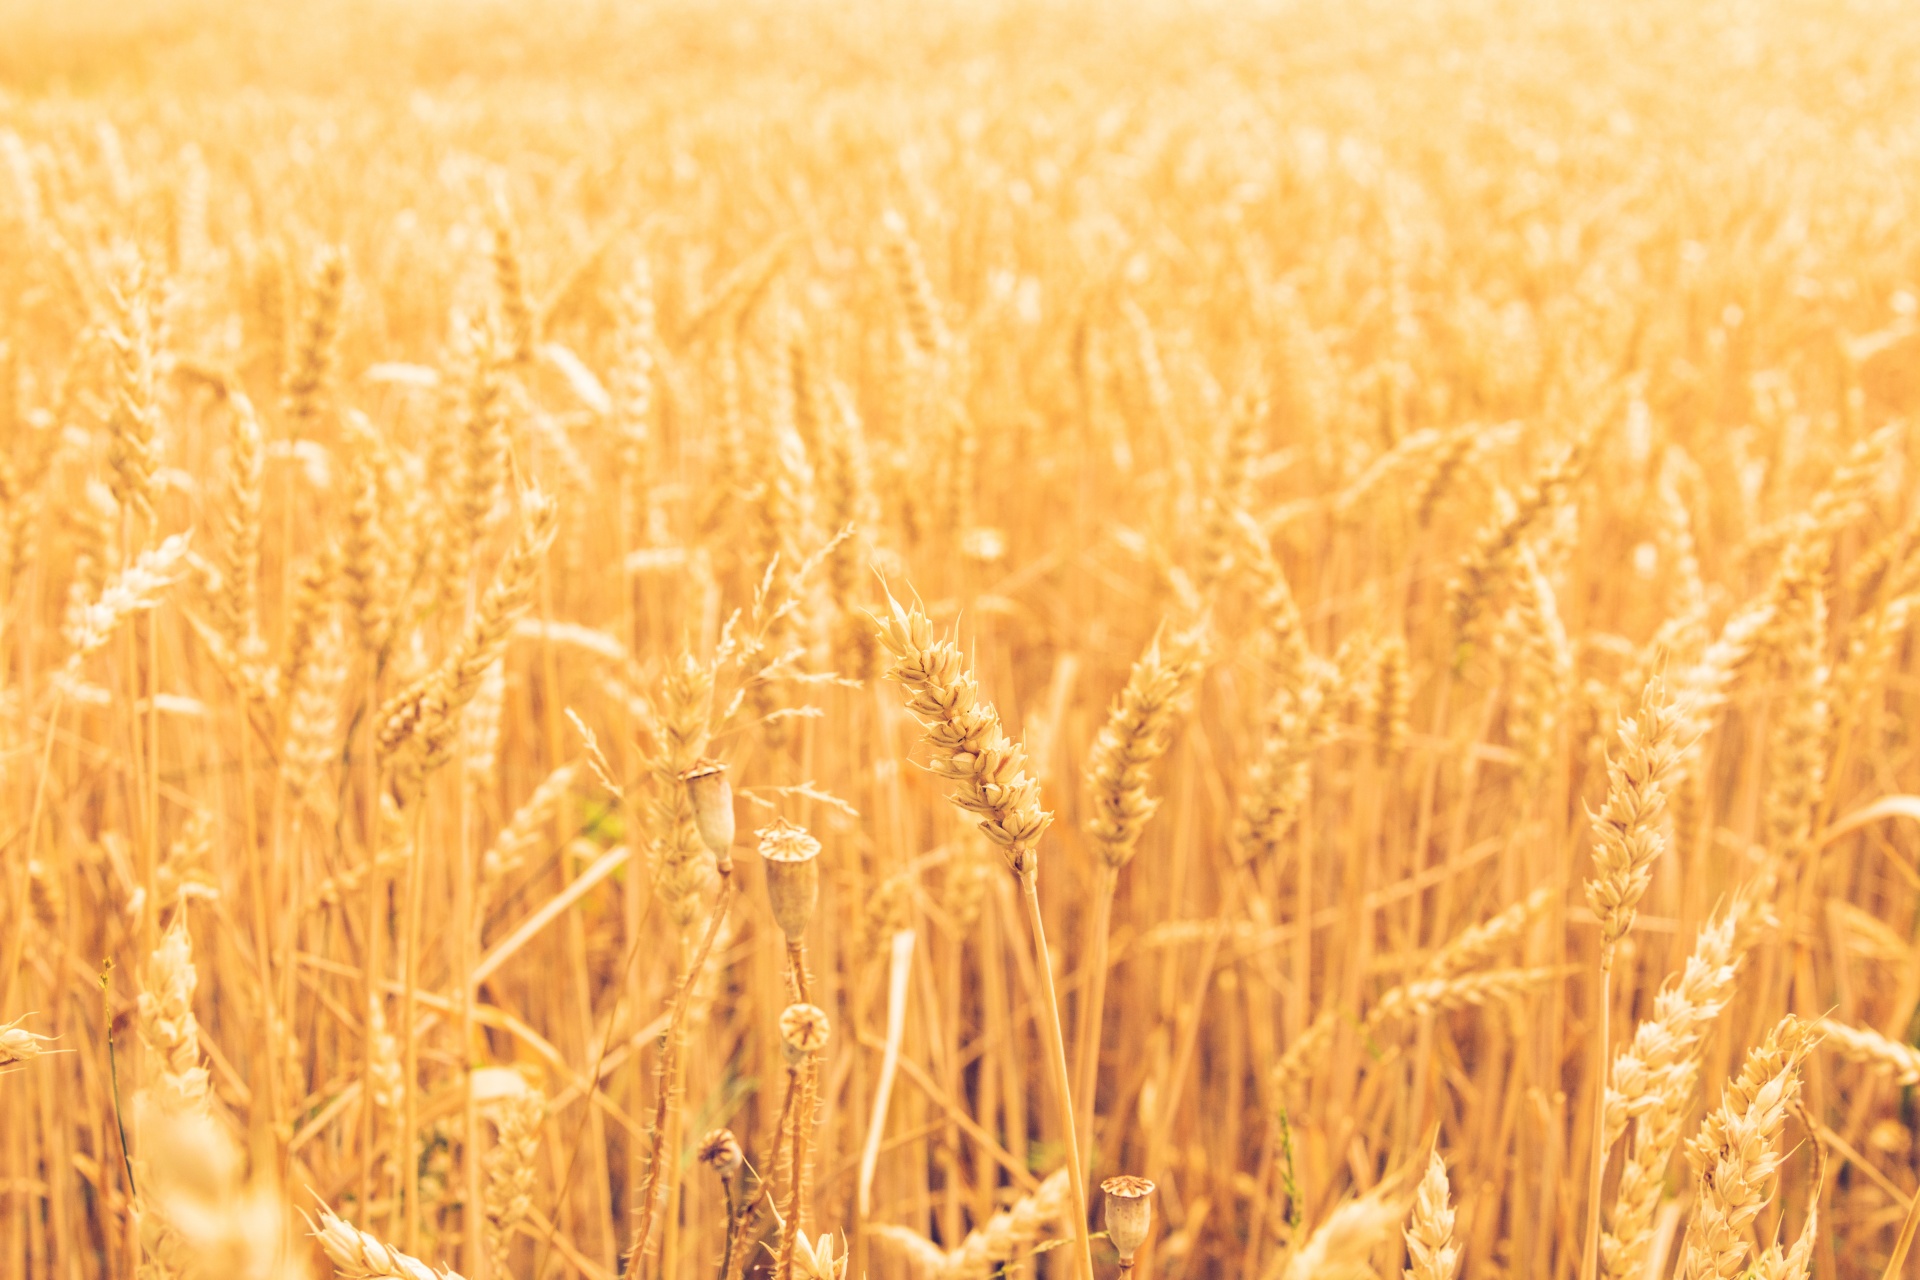 Golden Grain In The Field